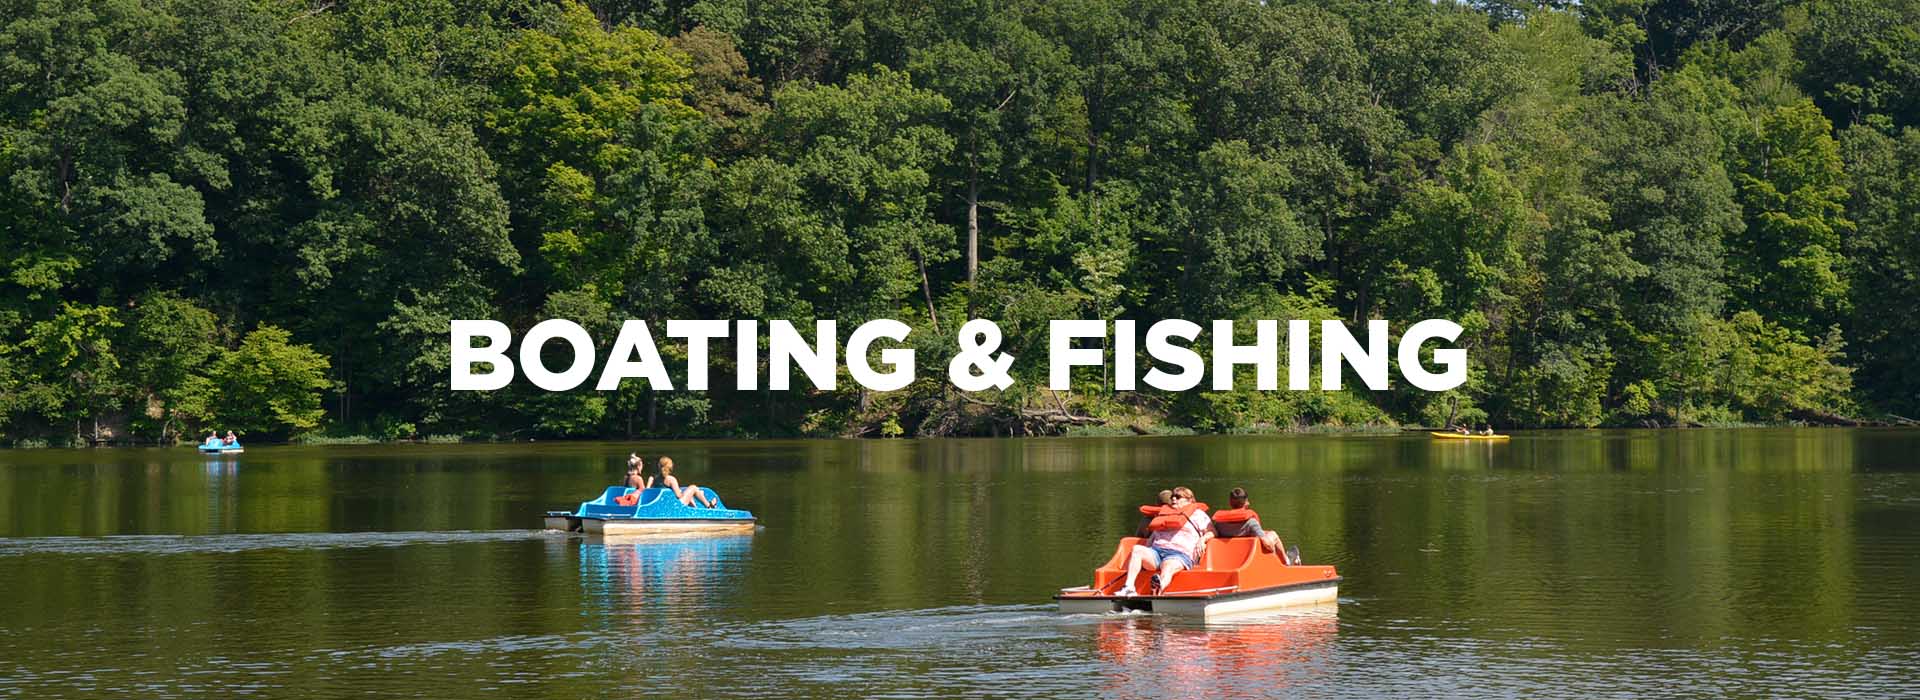 Boating & Fishing – Mill Creek MetroParks